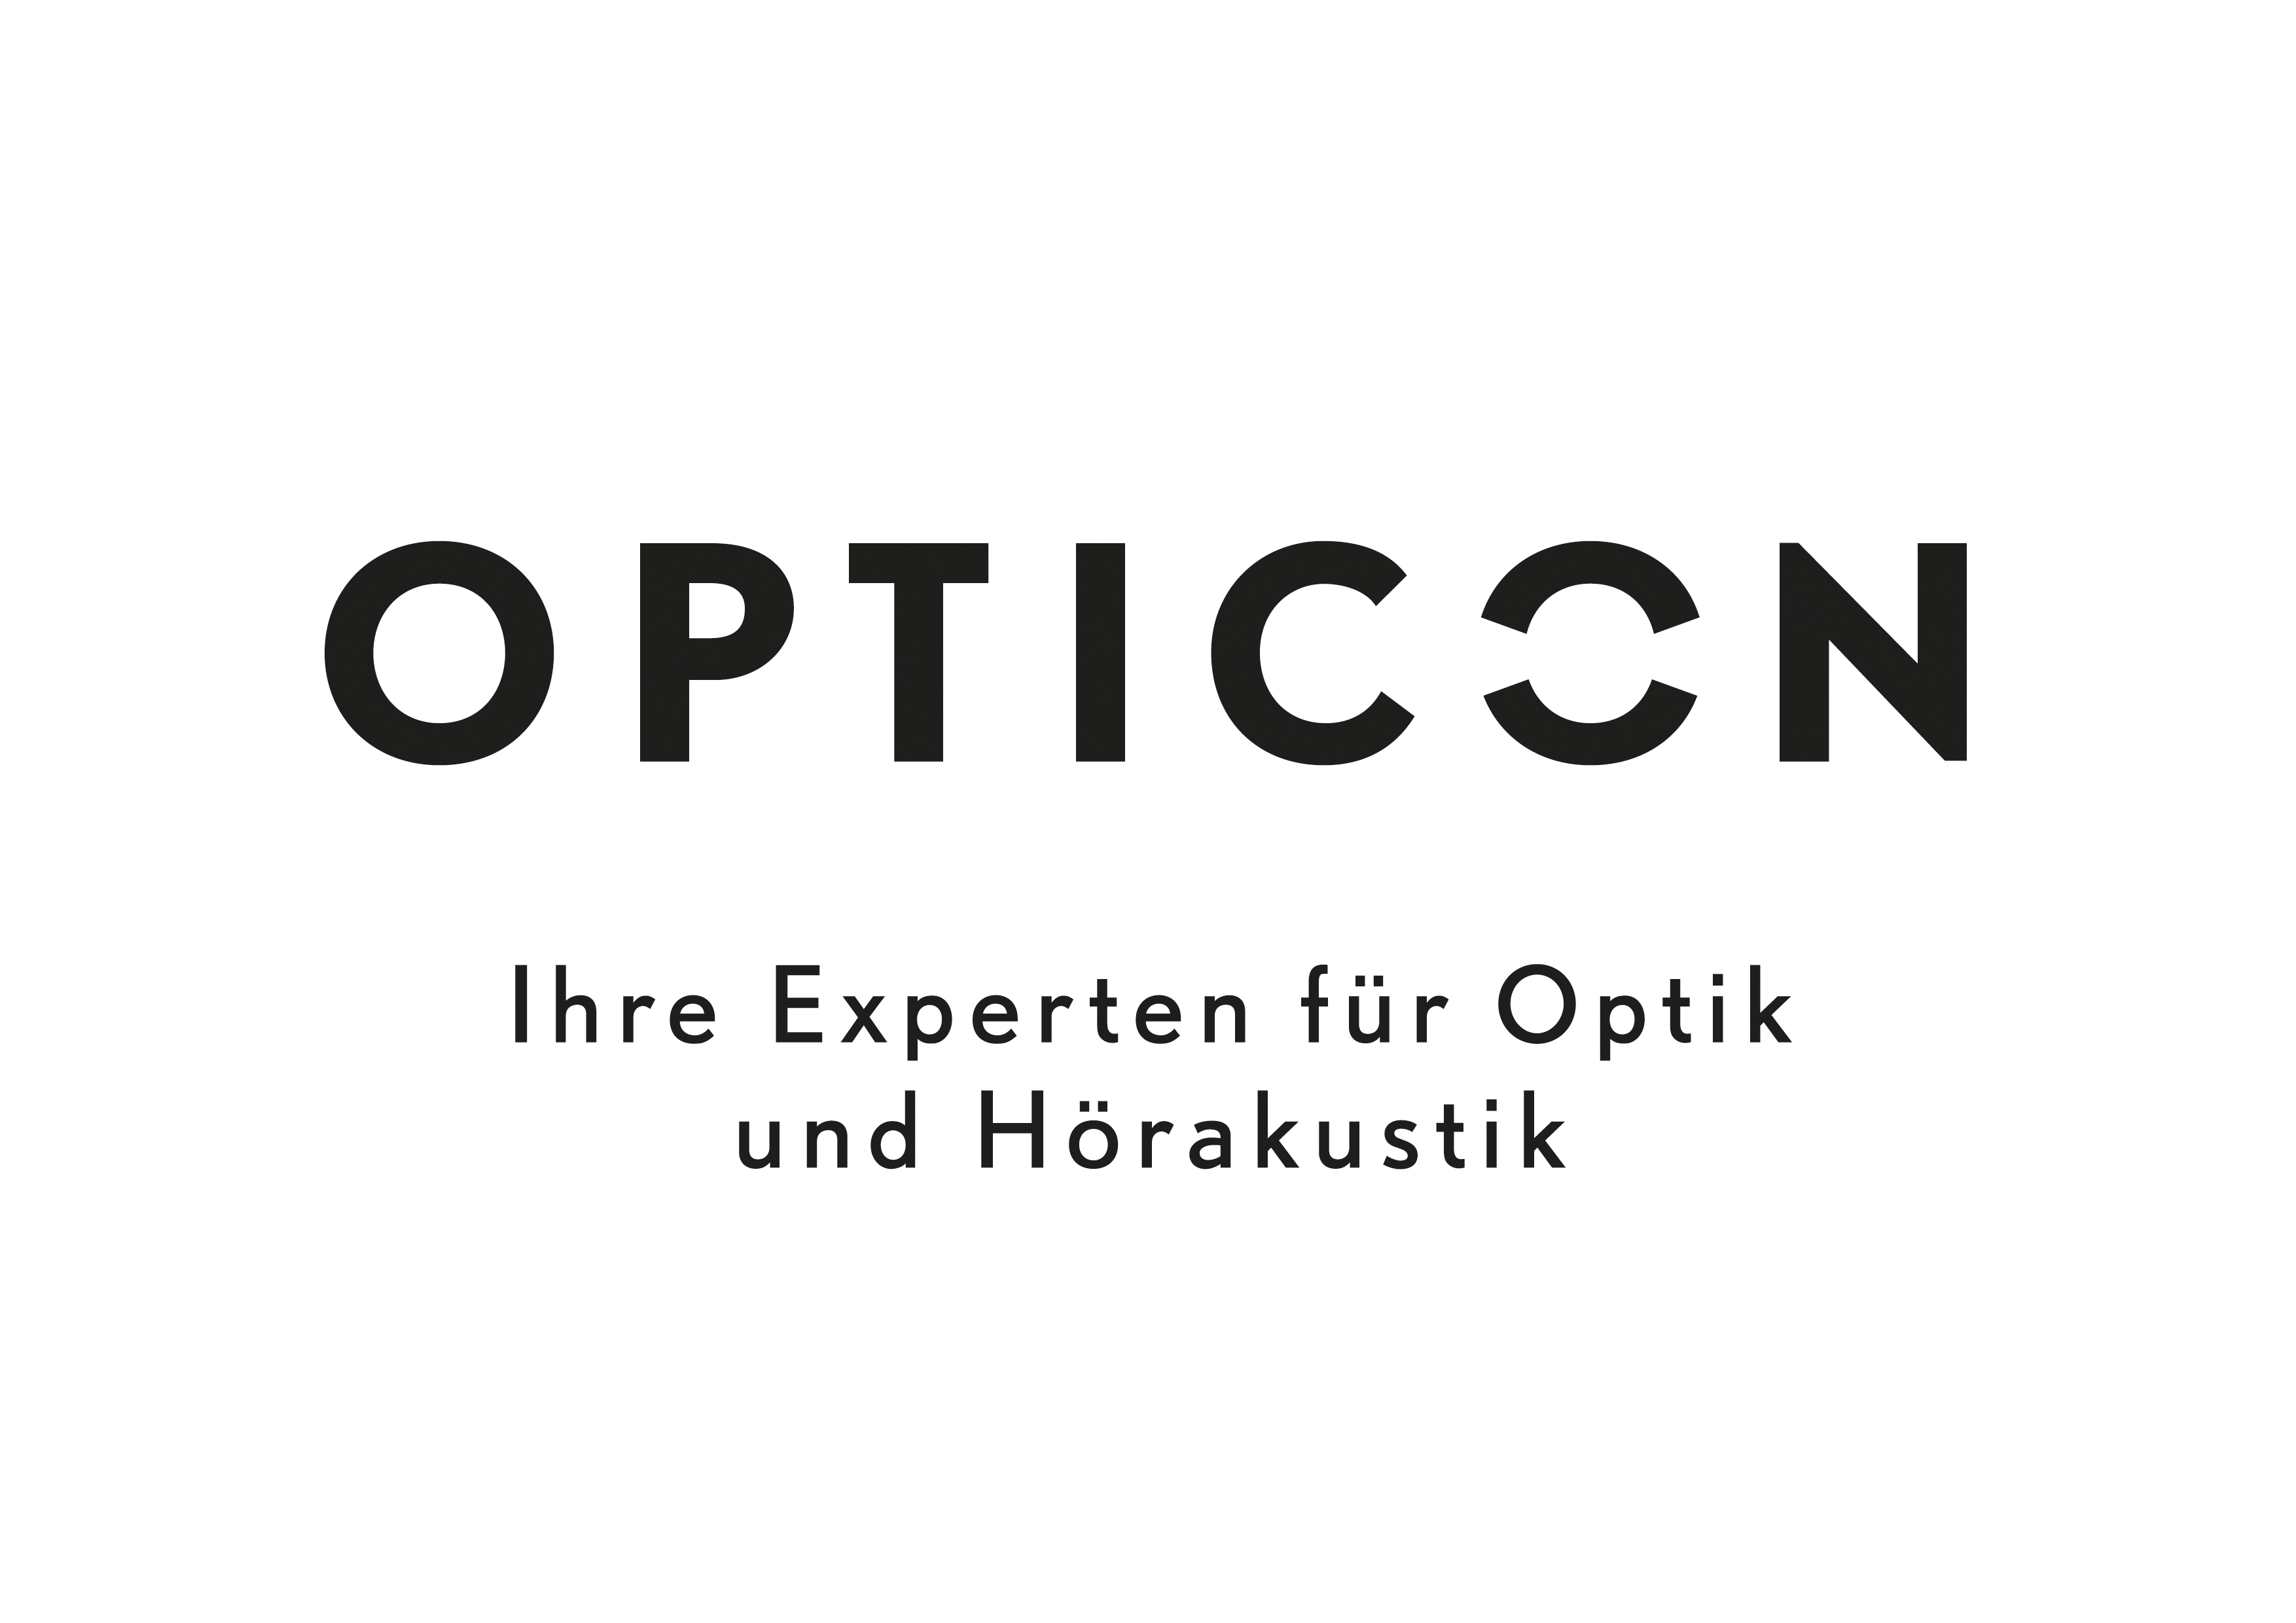 //carekom.de/wp-content/uploads/2018/11/opticon.png